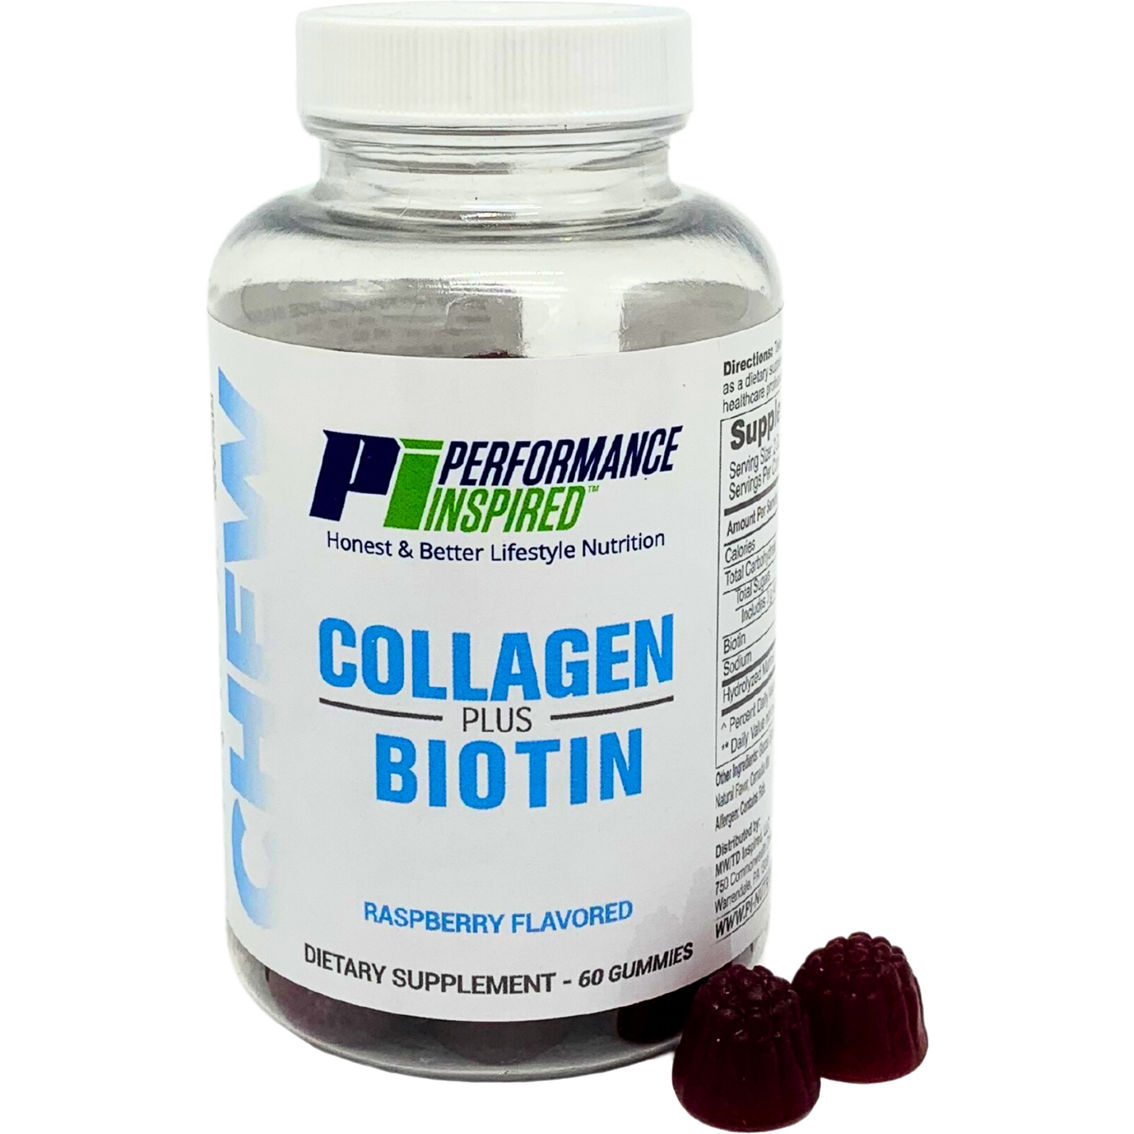 Performance Inspired Collagen + Biotin Gummy 60 ct. - Image 2 of 3